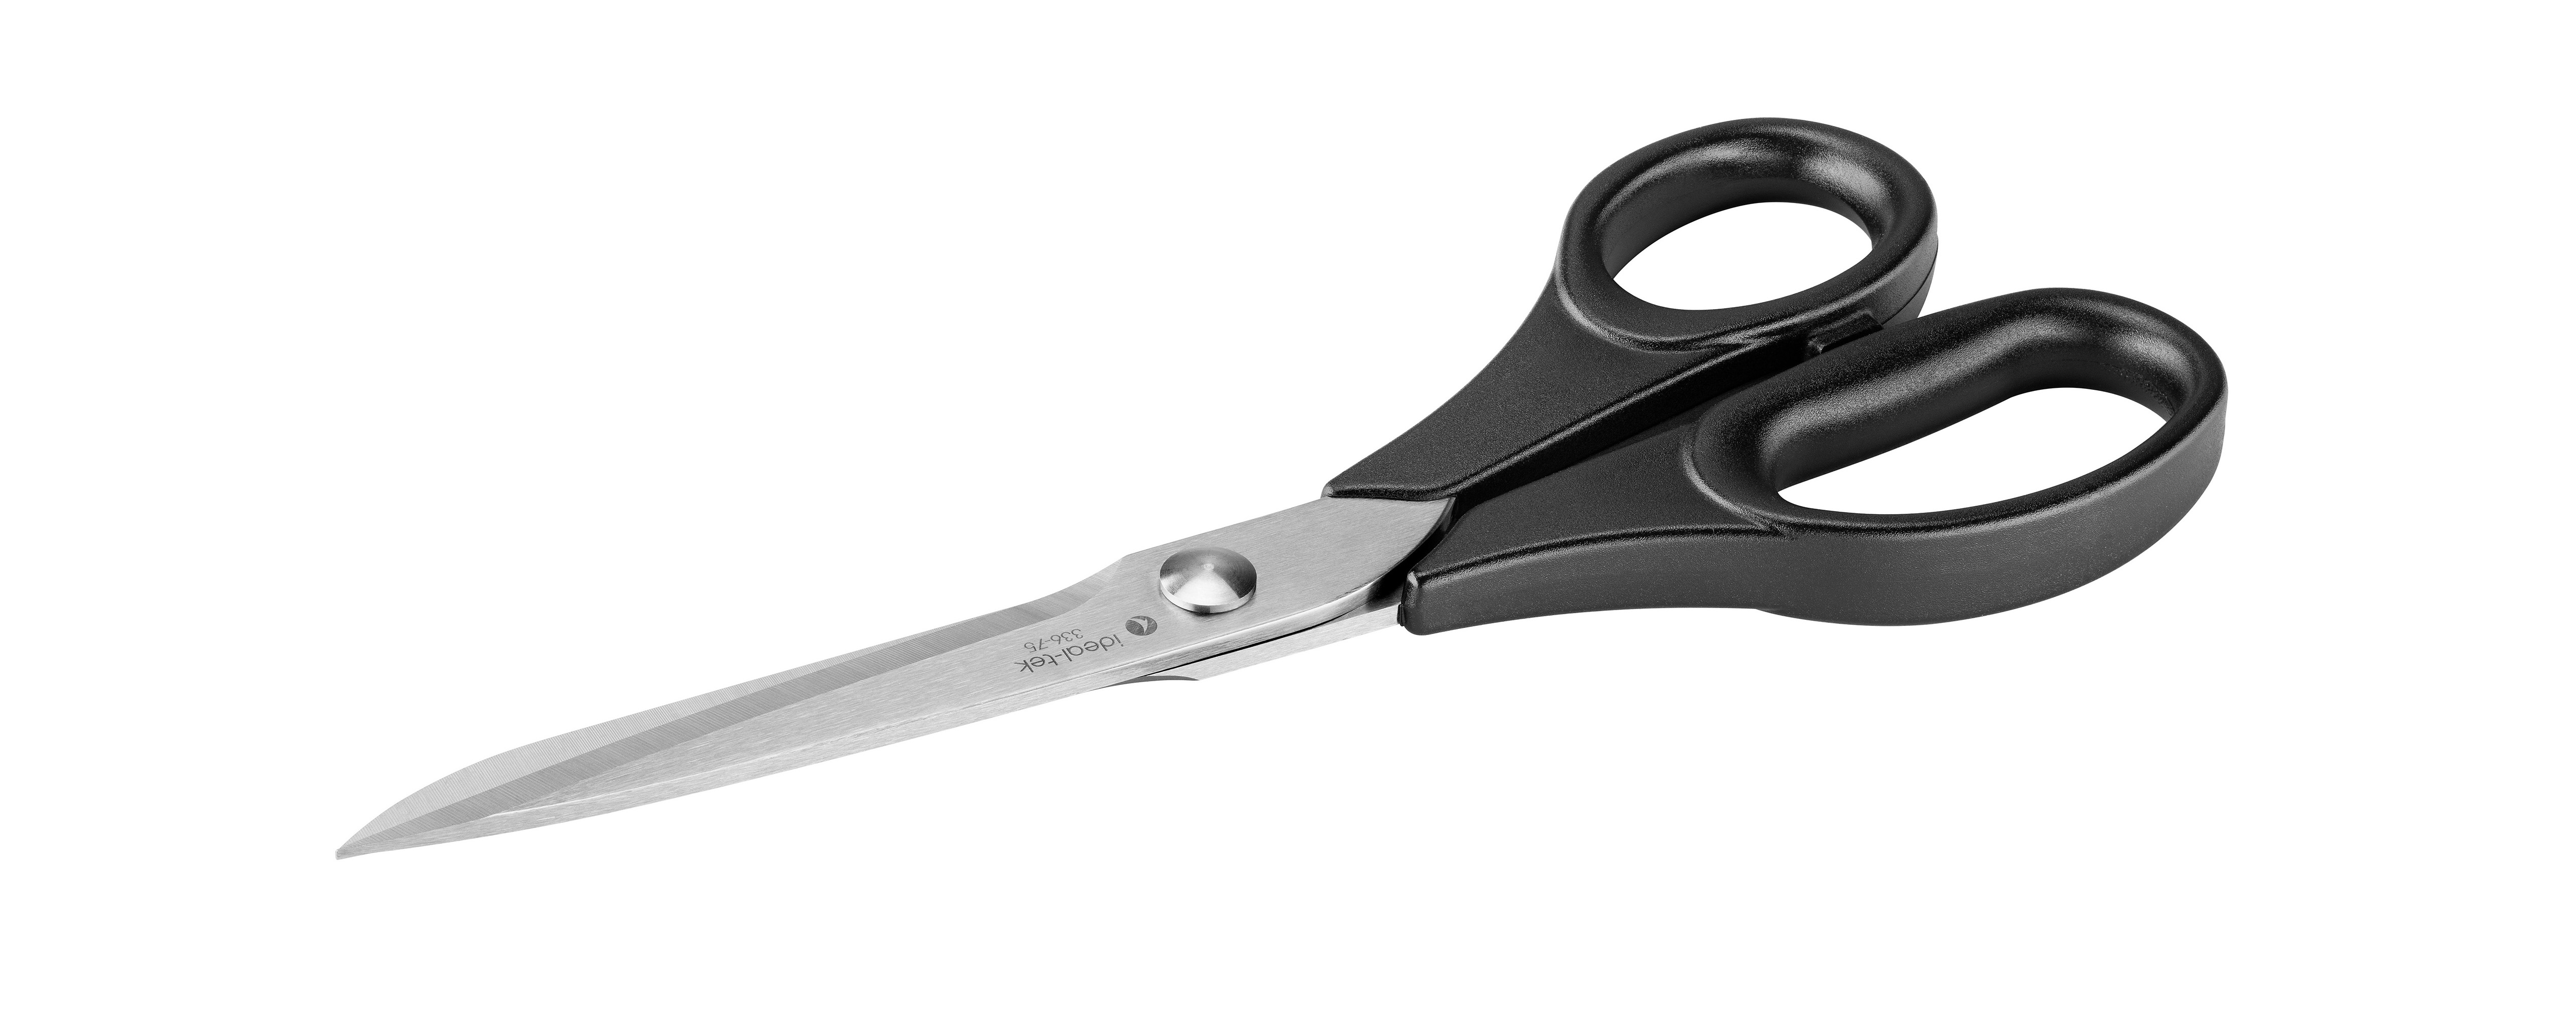 Scissors,all purpose,sharp,180mm